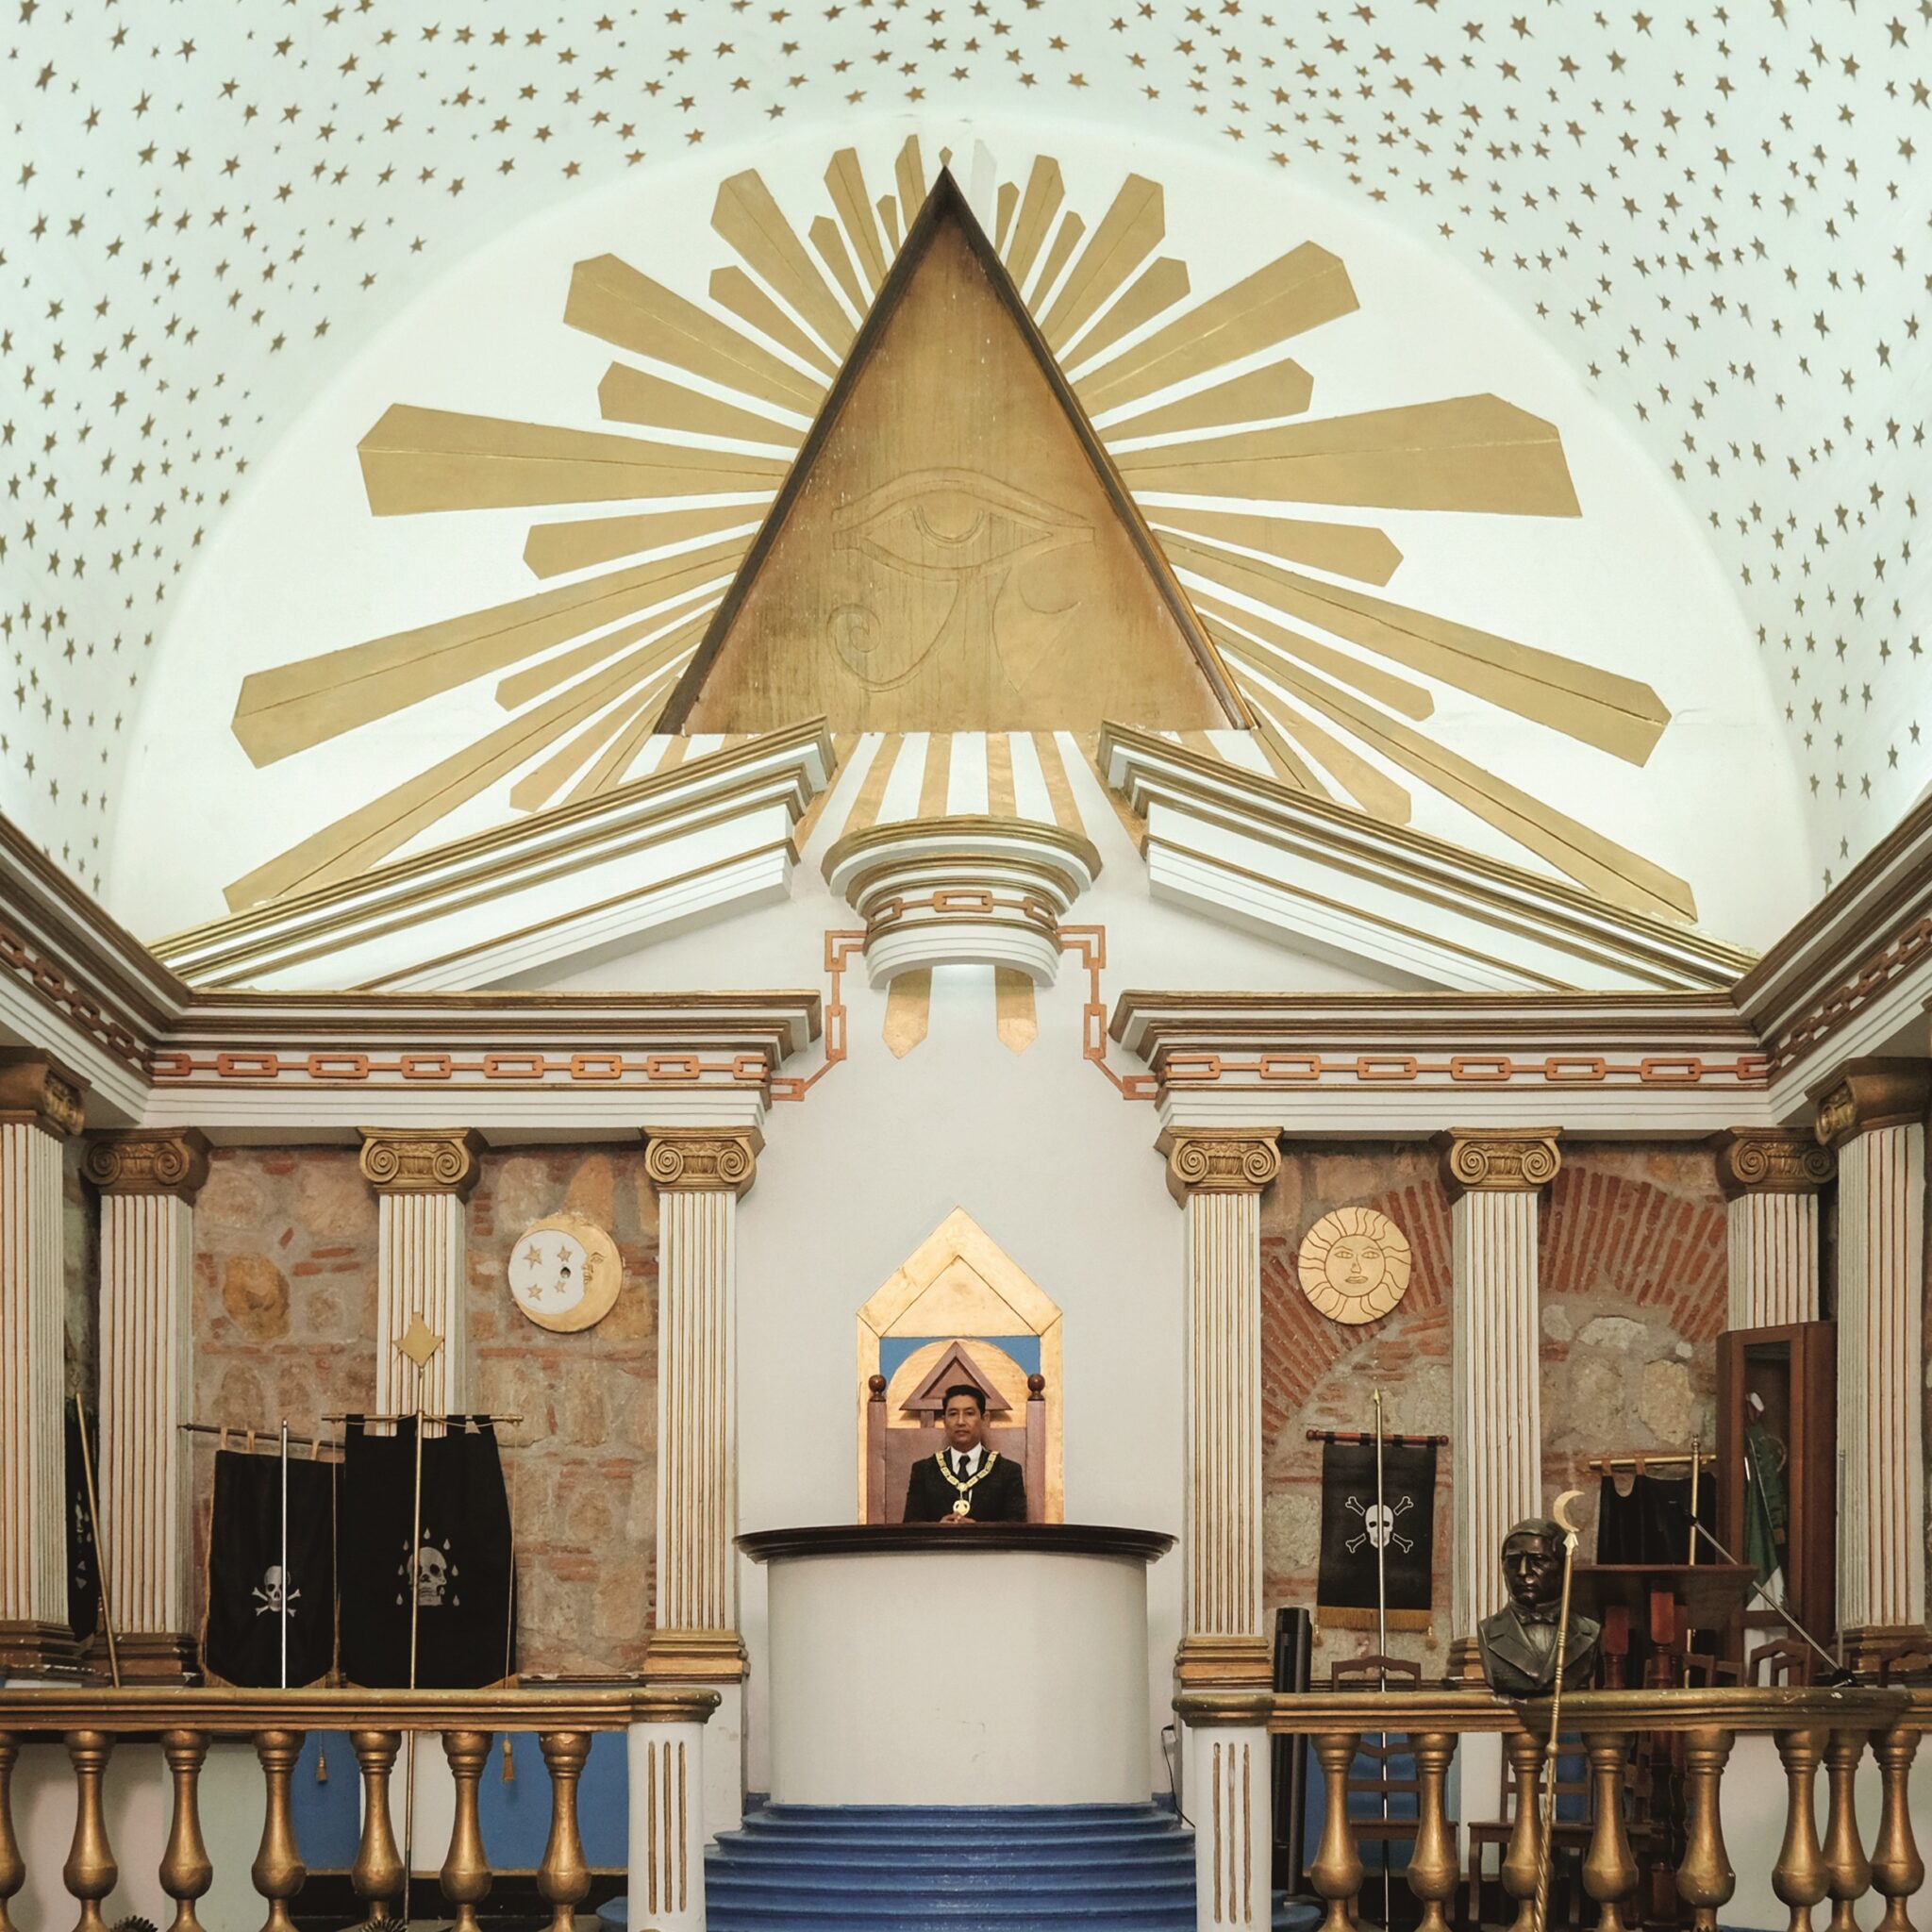 Freemasonry in Mexico: Inside the Oaxaca Masonic Temple, part of the Gran Logia Benito Juarez.